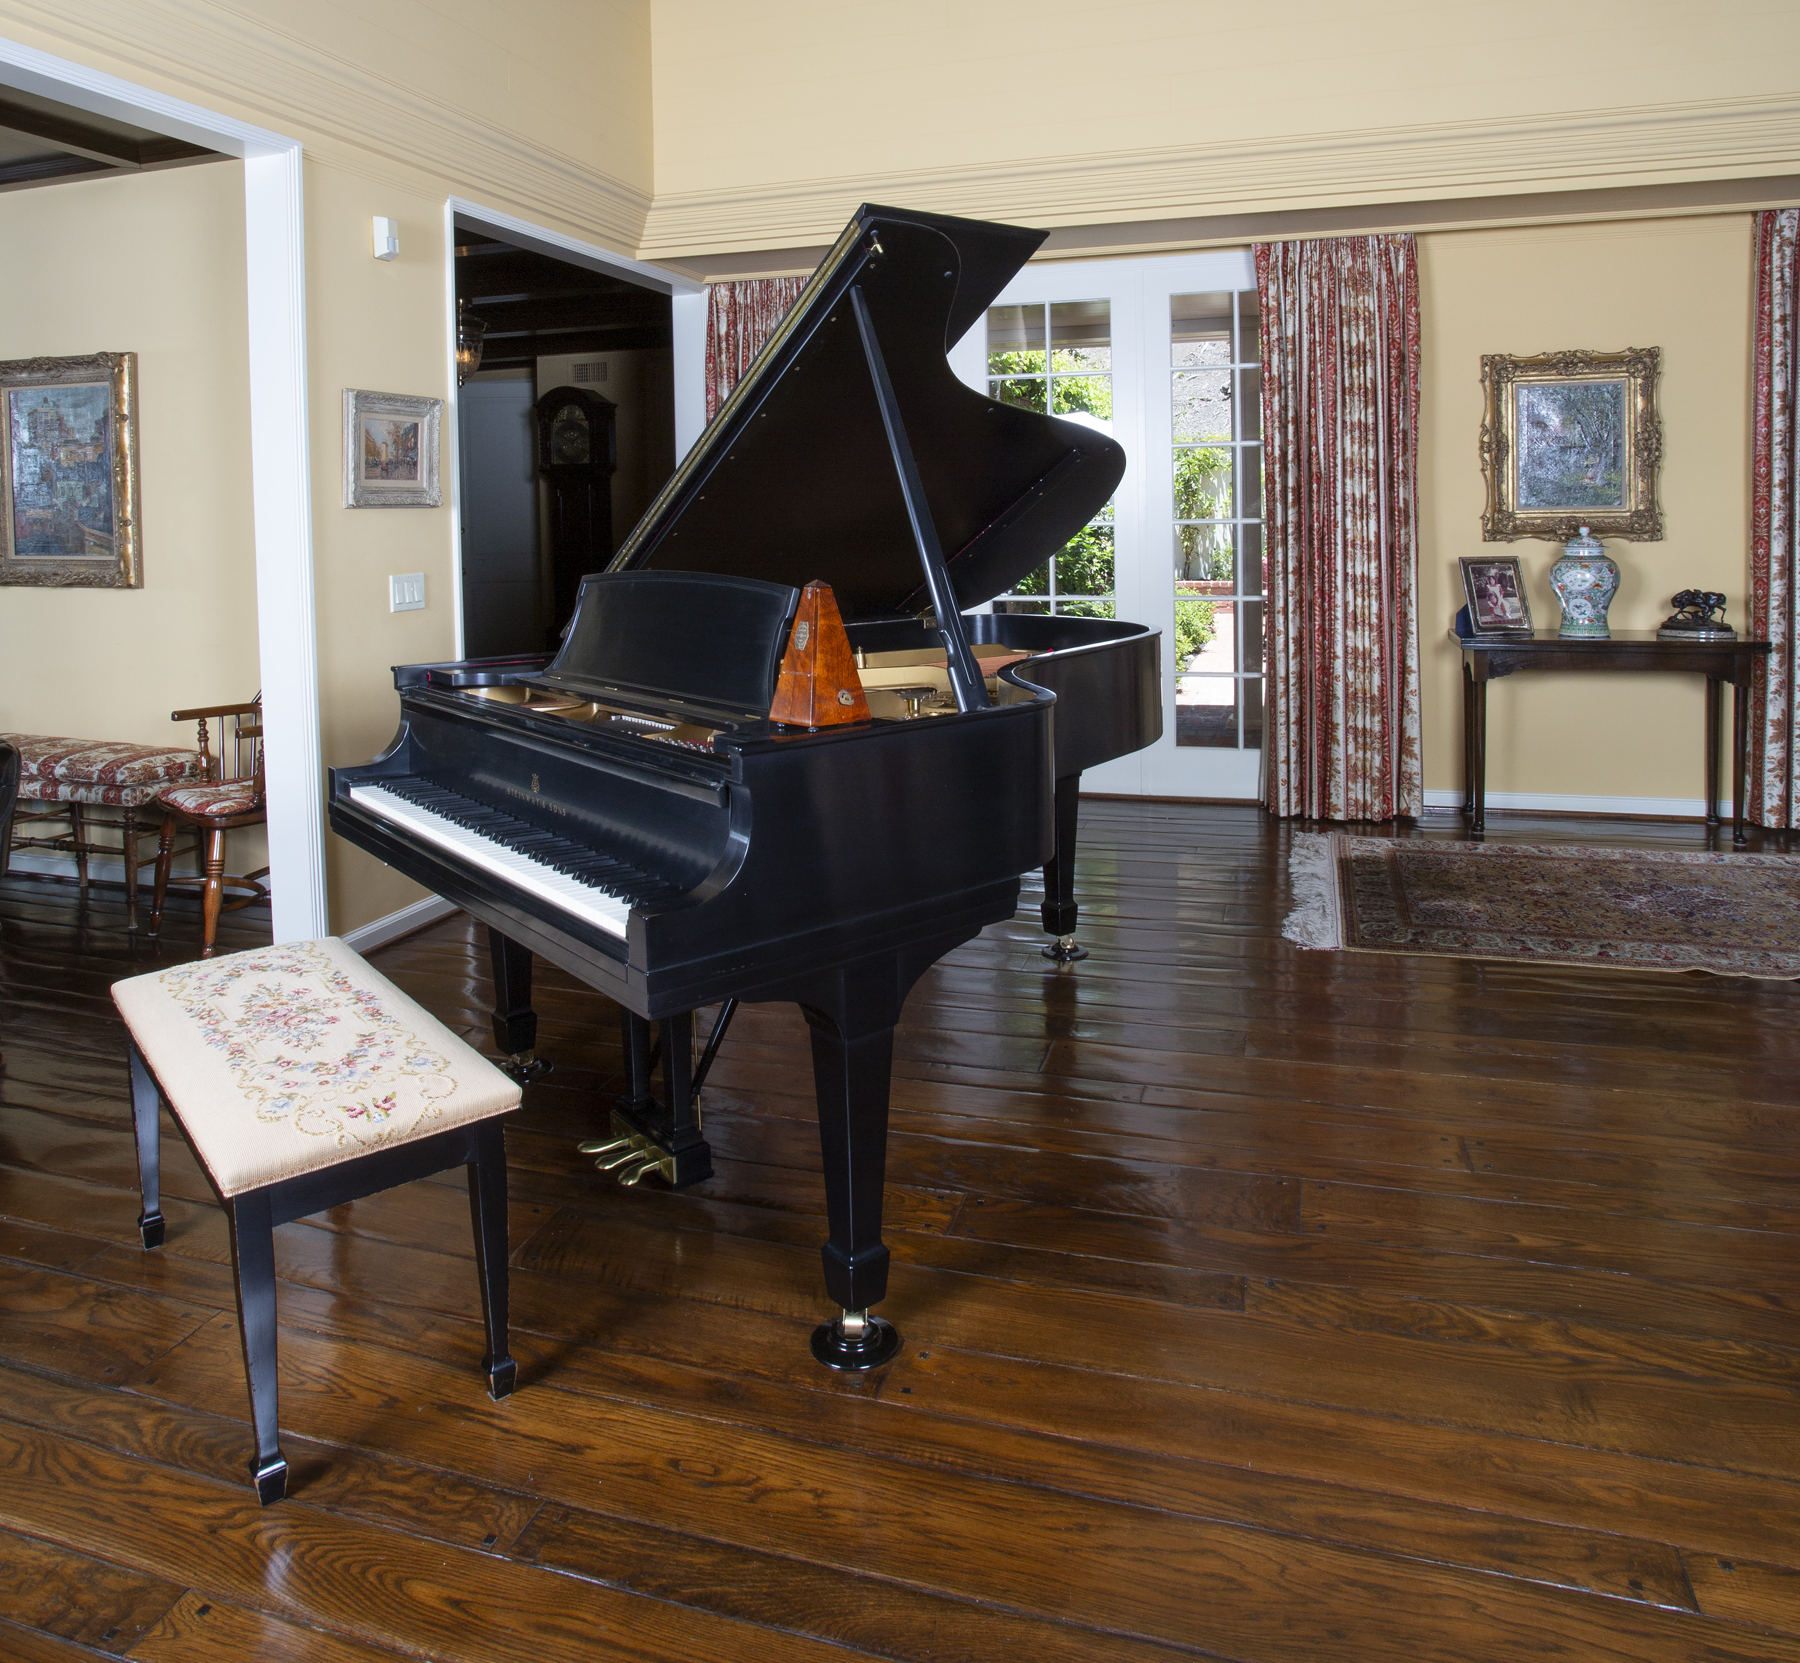 Piano belonging to Frank Sinatra